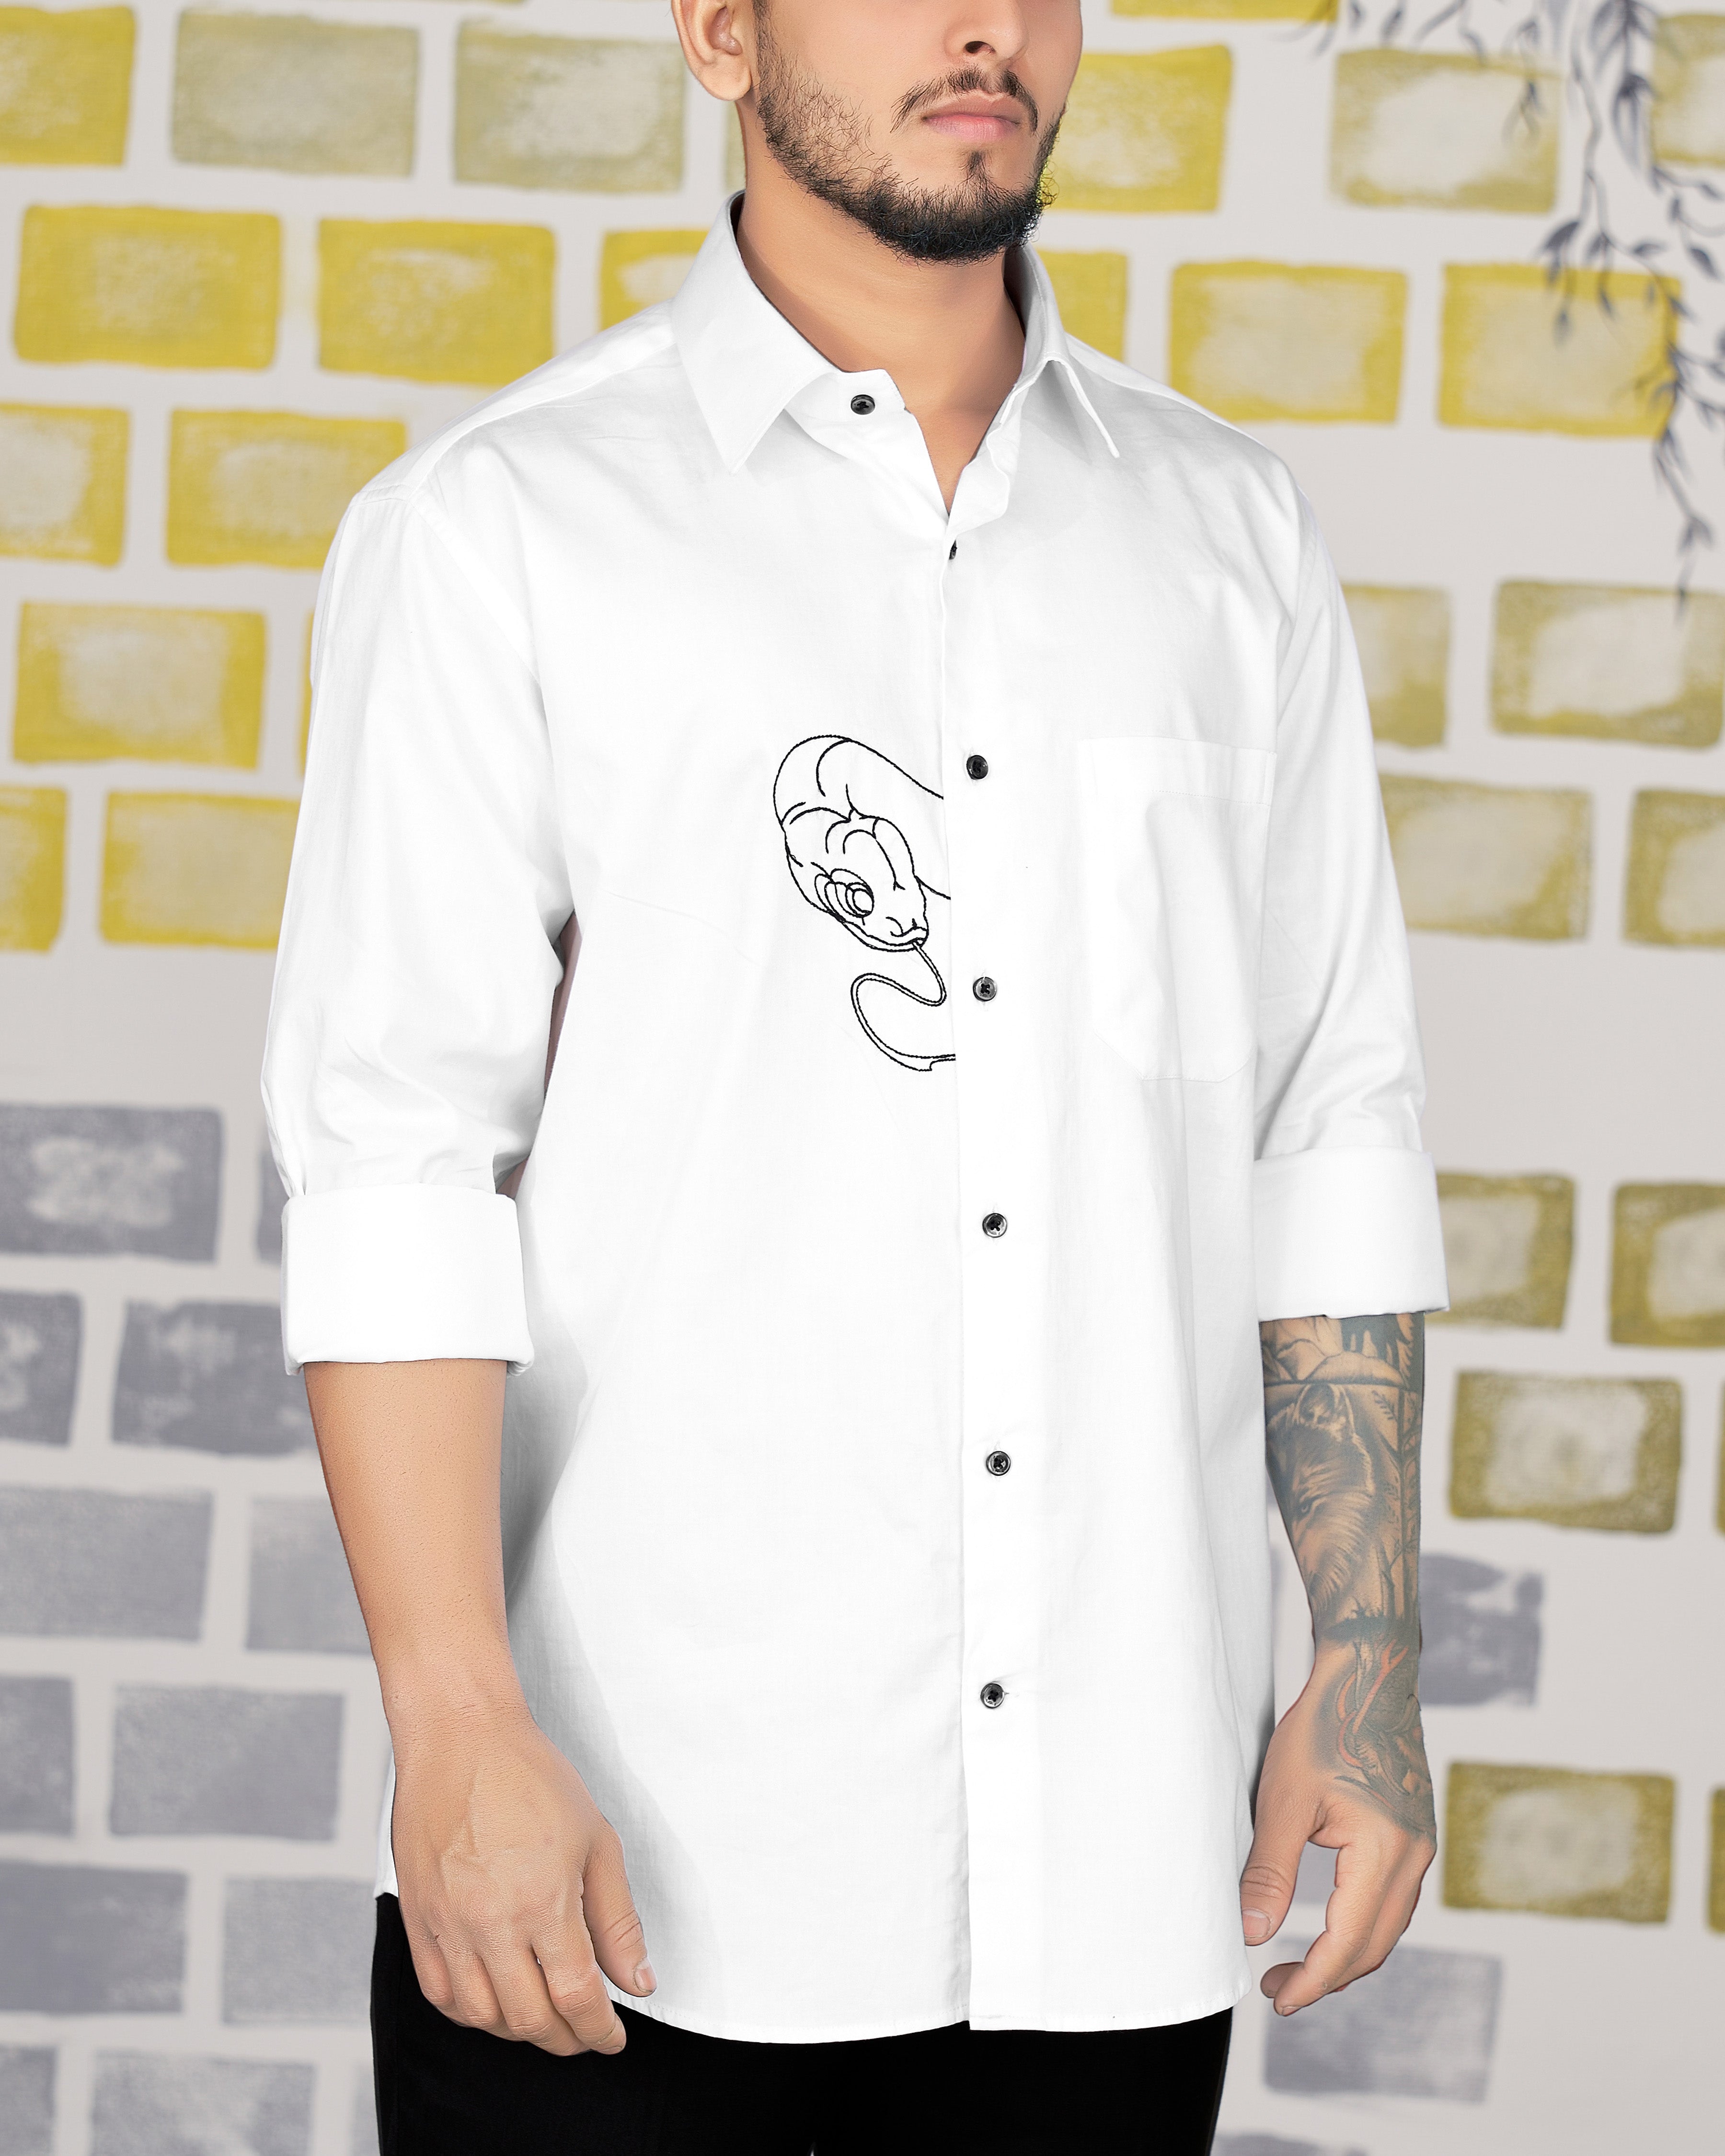 Bright White Subtle Sheen Snake Embroidered Super Soft Premium Cotton Designer Shirt 8735-BLK-E012-38, 8735-BLK-E012-H-38, 8735-BLK-E012-39, 8735-BLK-E012-H-39, 8735-BLK-E012-40, 8735-BLK-E012-H-40, 8735-BLK-E012-42, 8735-BLK-E012-H-42, 8735-BLK-E012-44, 8735-BLK-E012-H-44, 8735-BLK-E012-46, 8735-BLK-E012-H-46, 8735-BLK-E012-48, 8735-BLK-E012-H-48, 8735-BLK-E012-50, 8735-BLK-E012-H-50, 8735-BLK-E012-52, 8735-BLK-E012-H-52